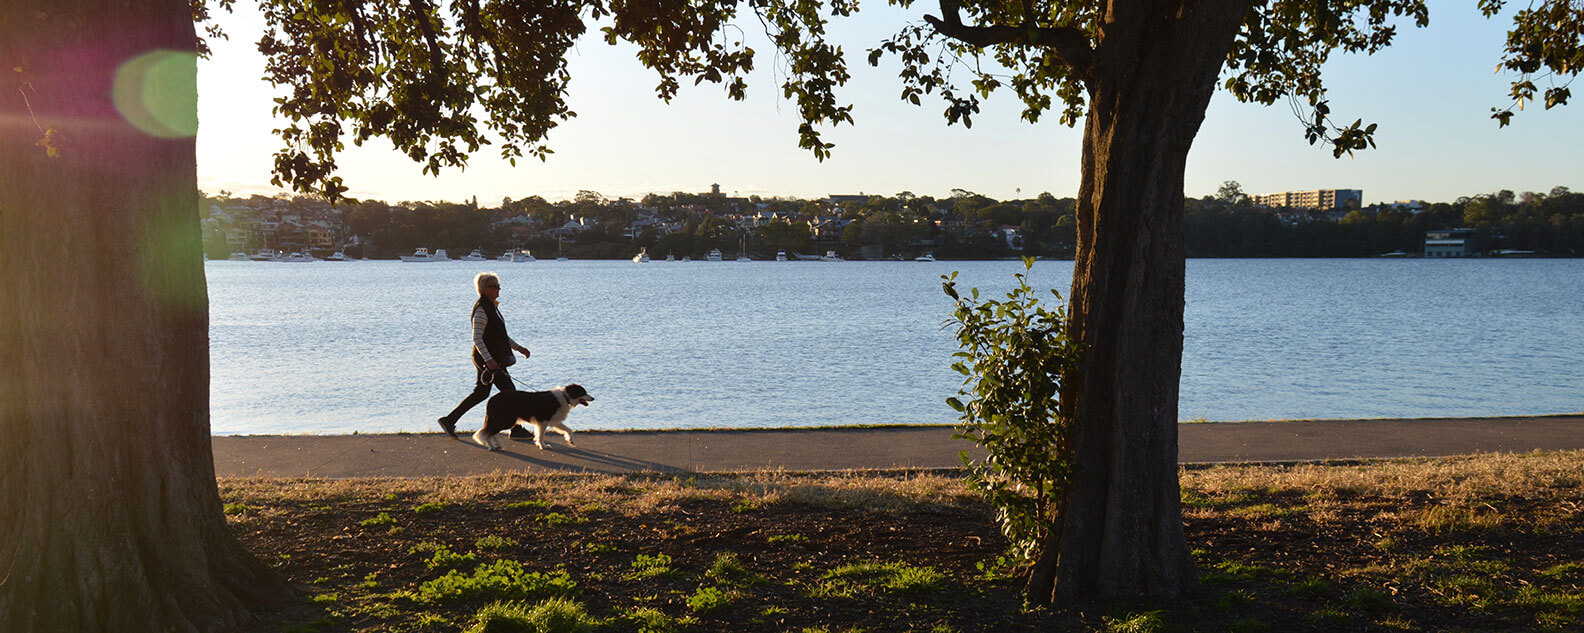 Woman walking dog beside lake in park